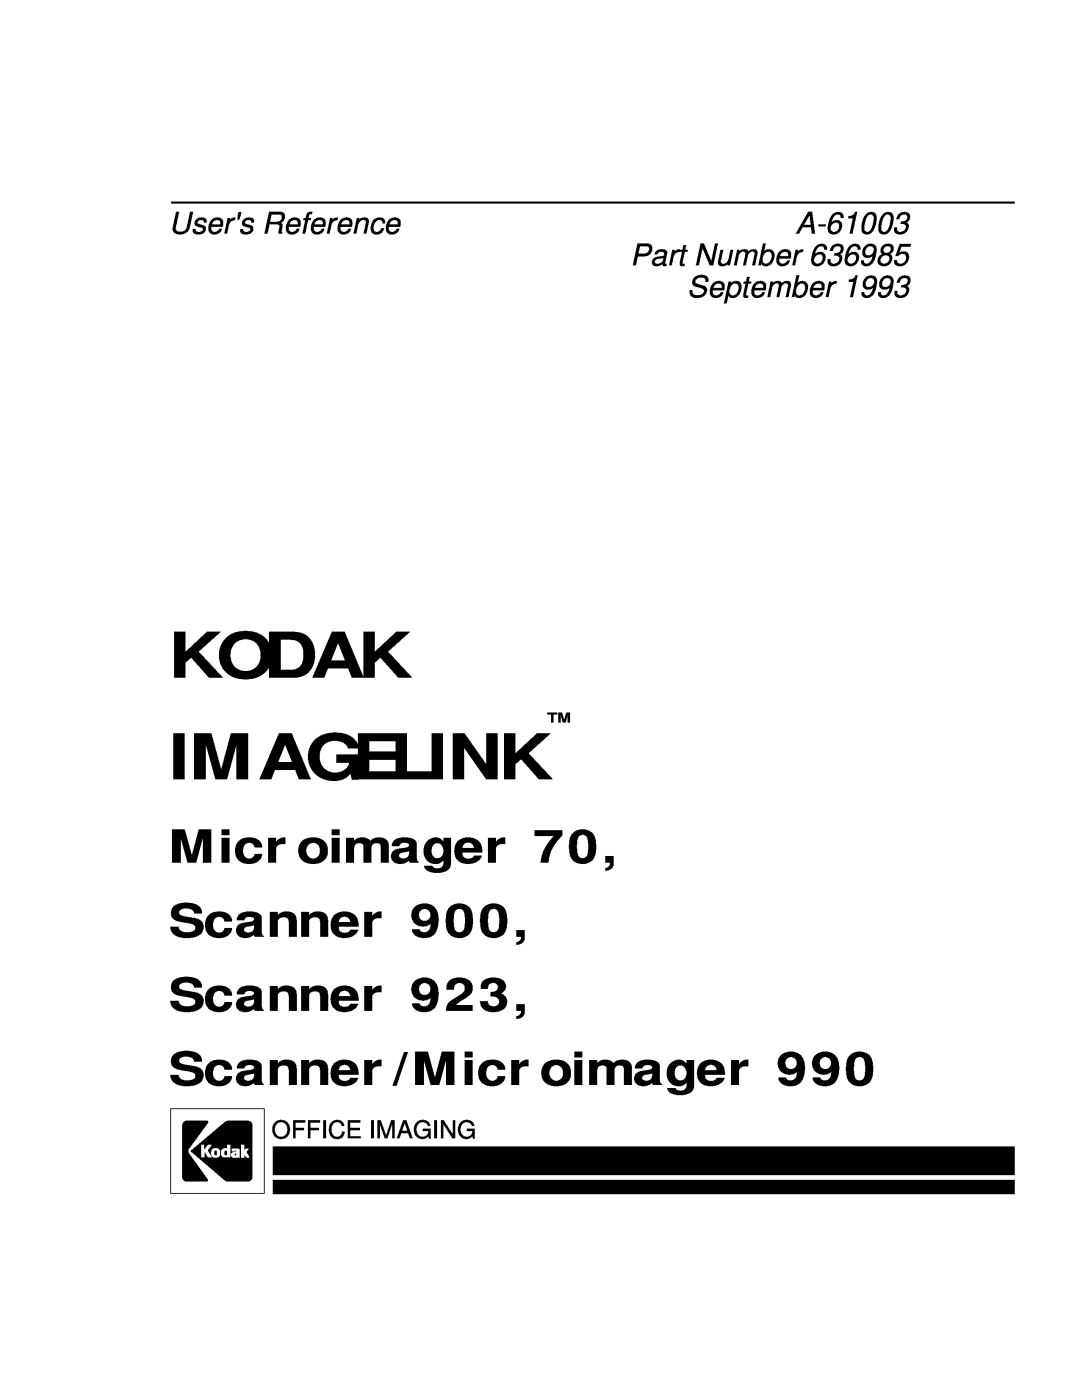 Kodak A-61003 manual Kodak Imagelink, Microimager Scanner Scanner Scanner/Microimager, Users Reference, September 